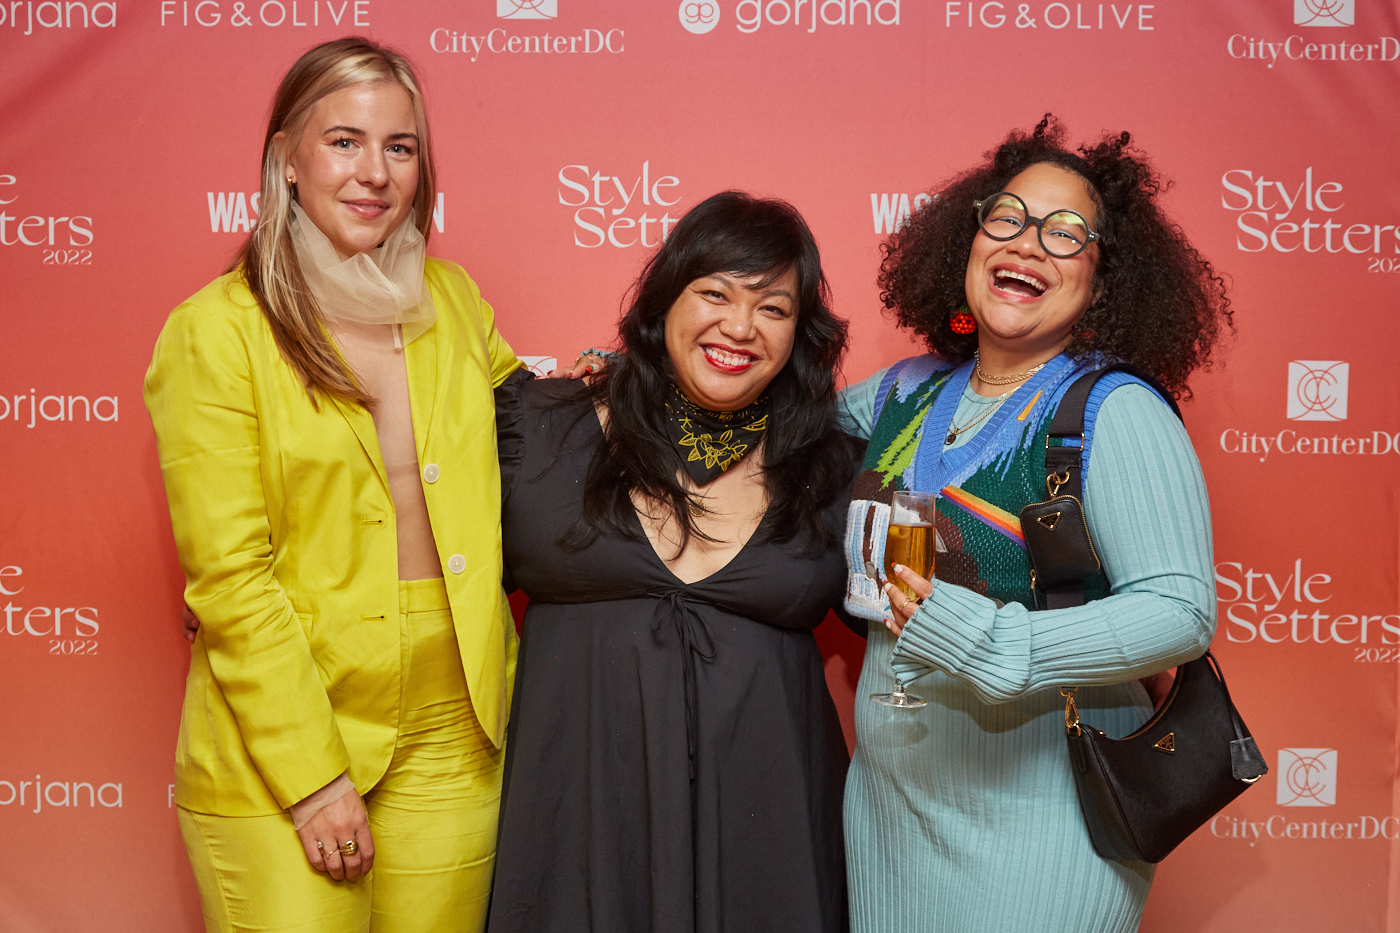 Washingtonian Style Setters 2022 Guests: Libby Rasmussen, Vina Sananikone, and Paola Velez